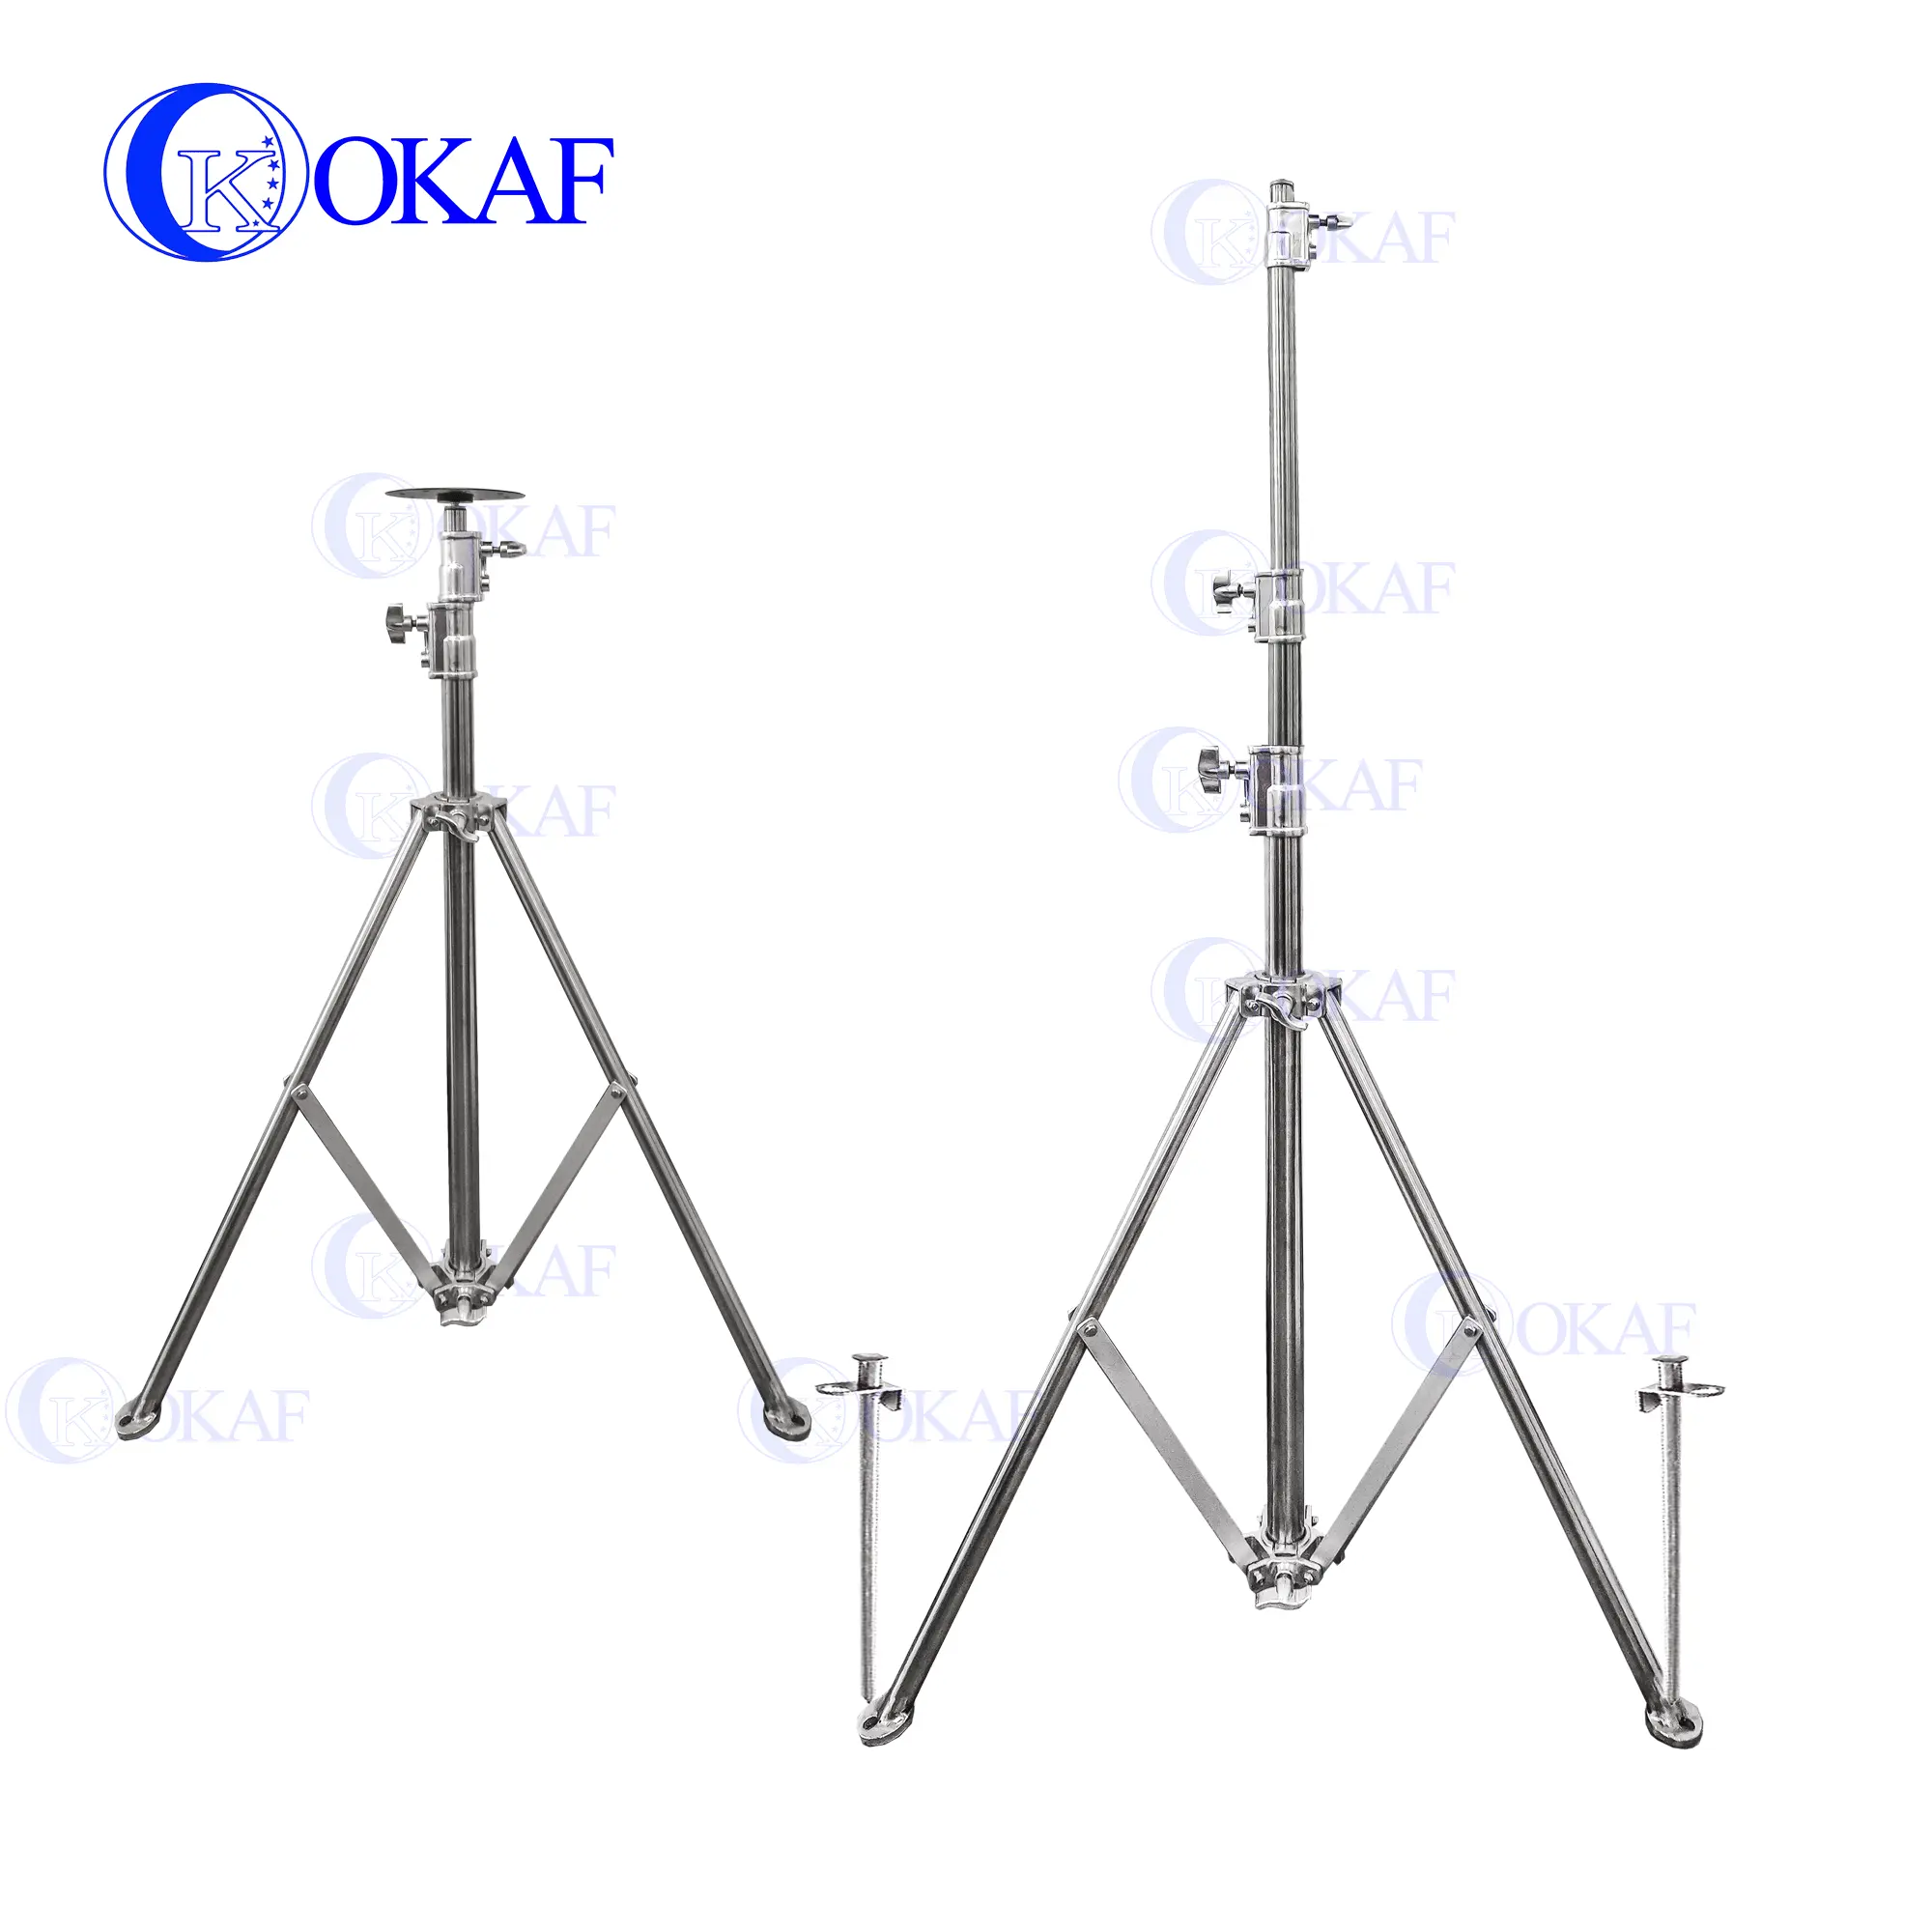 Lightweight Tripod Telescopic Mast Pole Stainless Steel Portable Antenna Manual Mast CCTV Surveillance Camera Tower